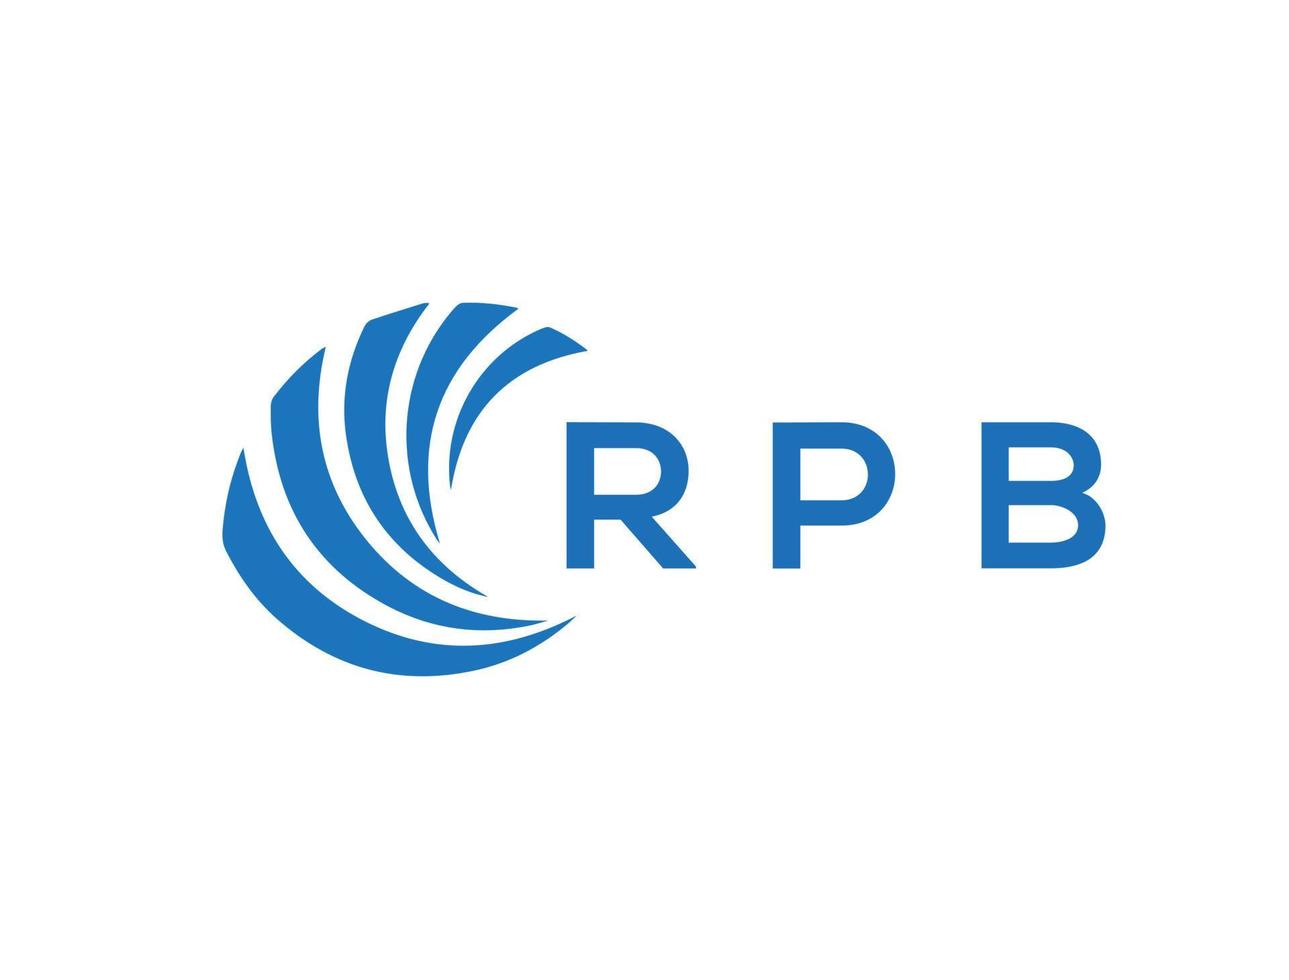 rpb brief logo ontwerp Aan wit achtergrond. rpb creatief cirkel brief logo concept. rpb brief ontwerp. vector